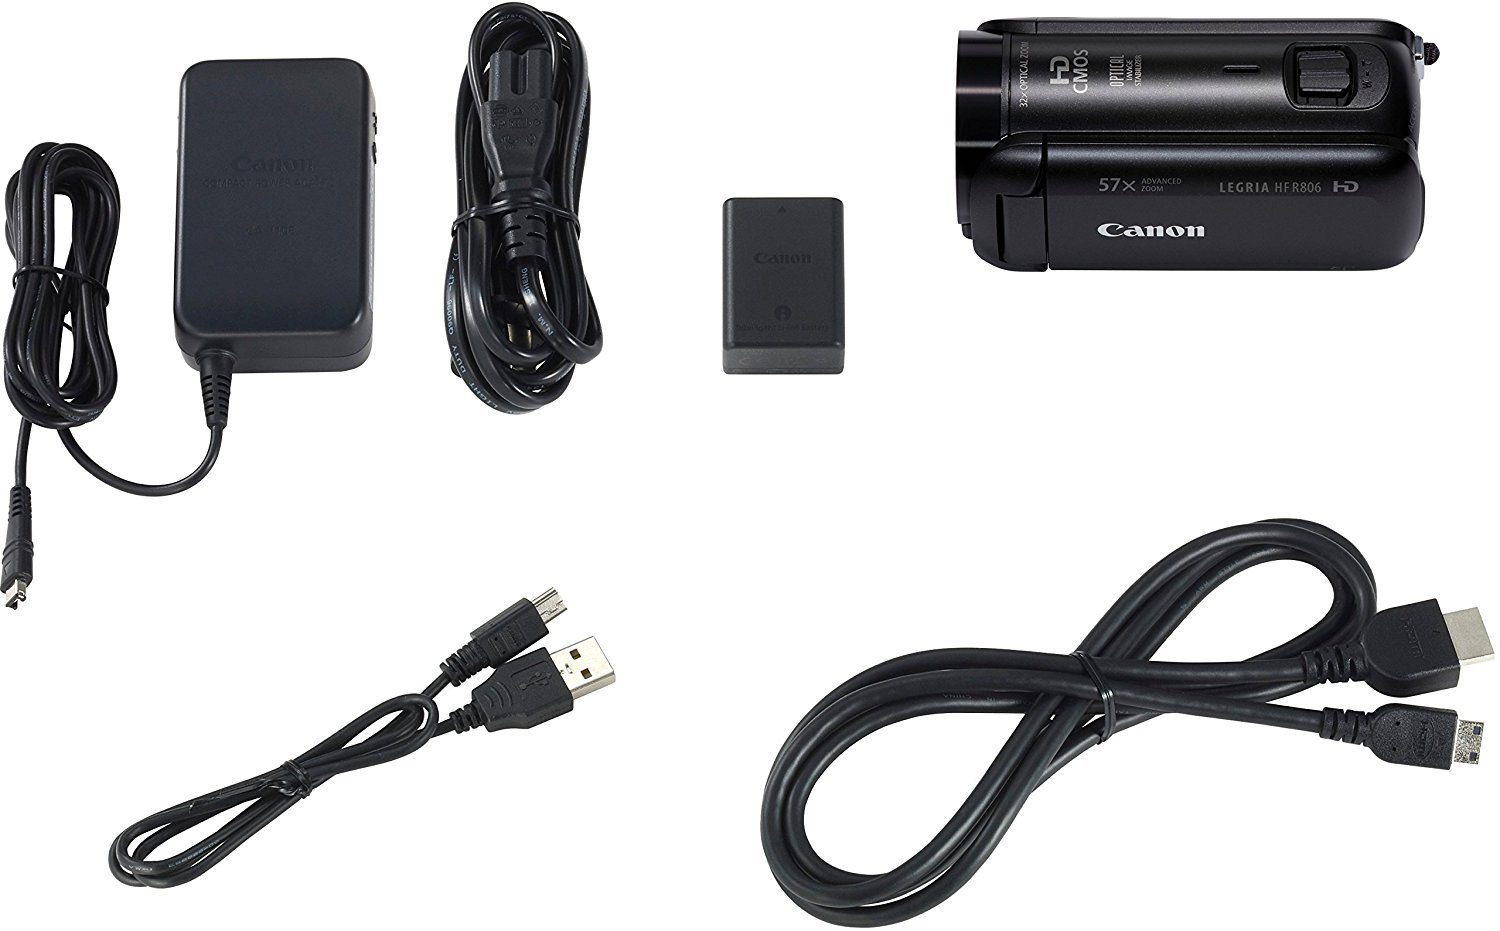 Canon Legria HF R806 Gamescom Camcorder HD Lieferumfang